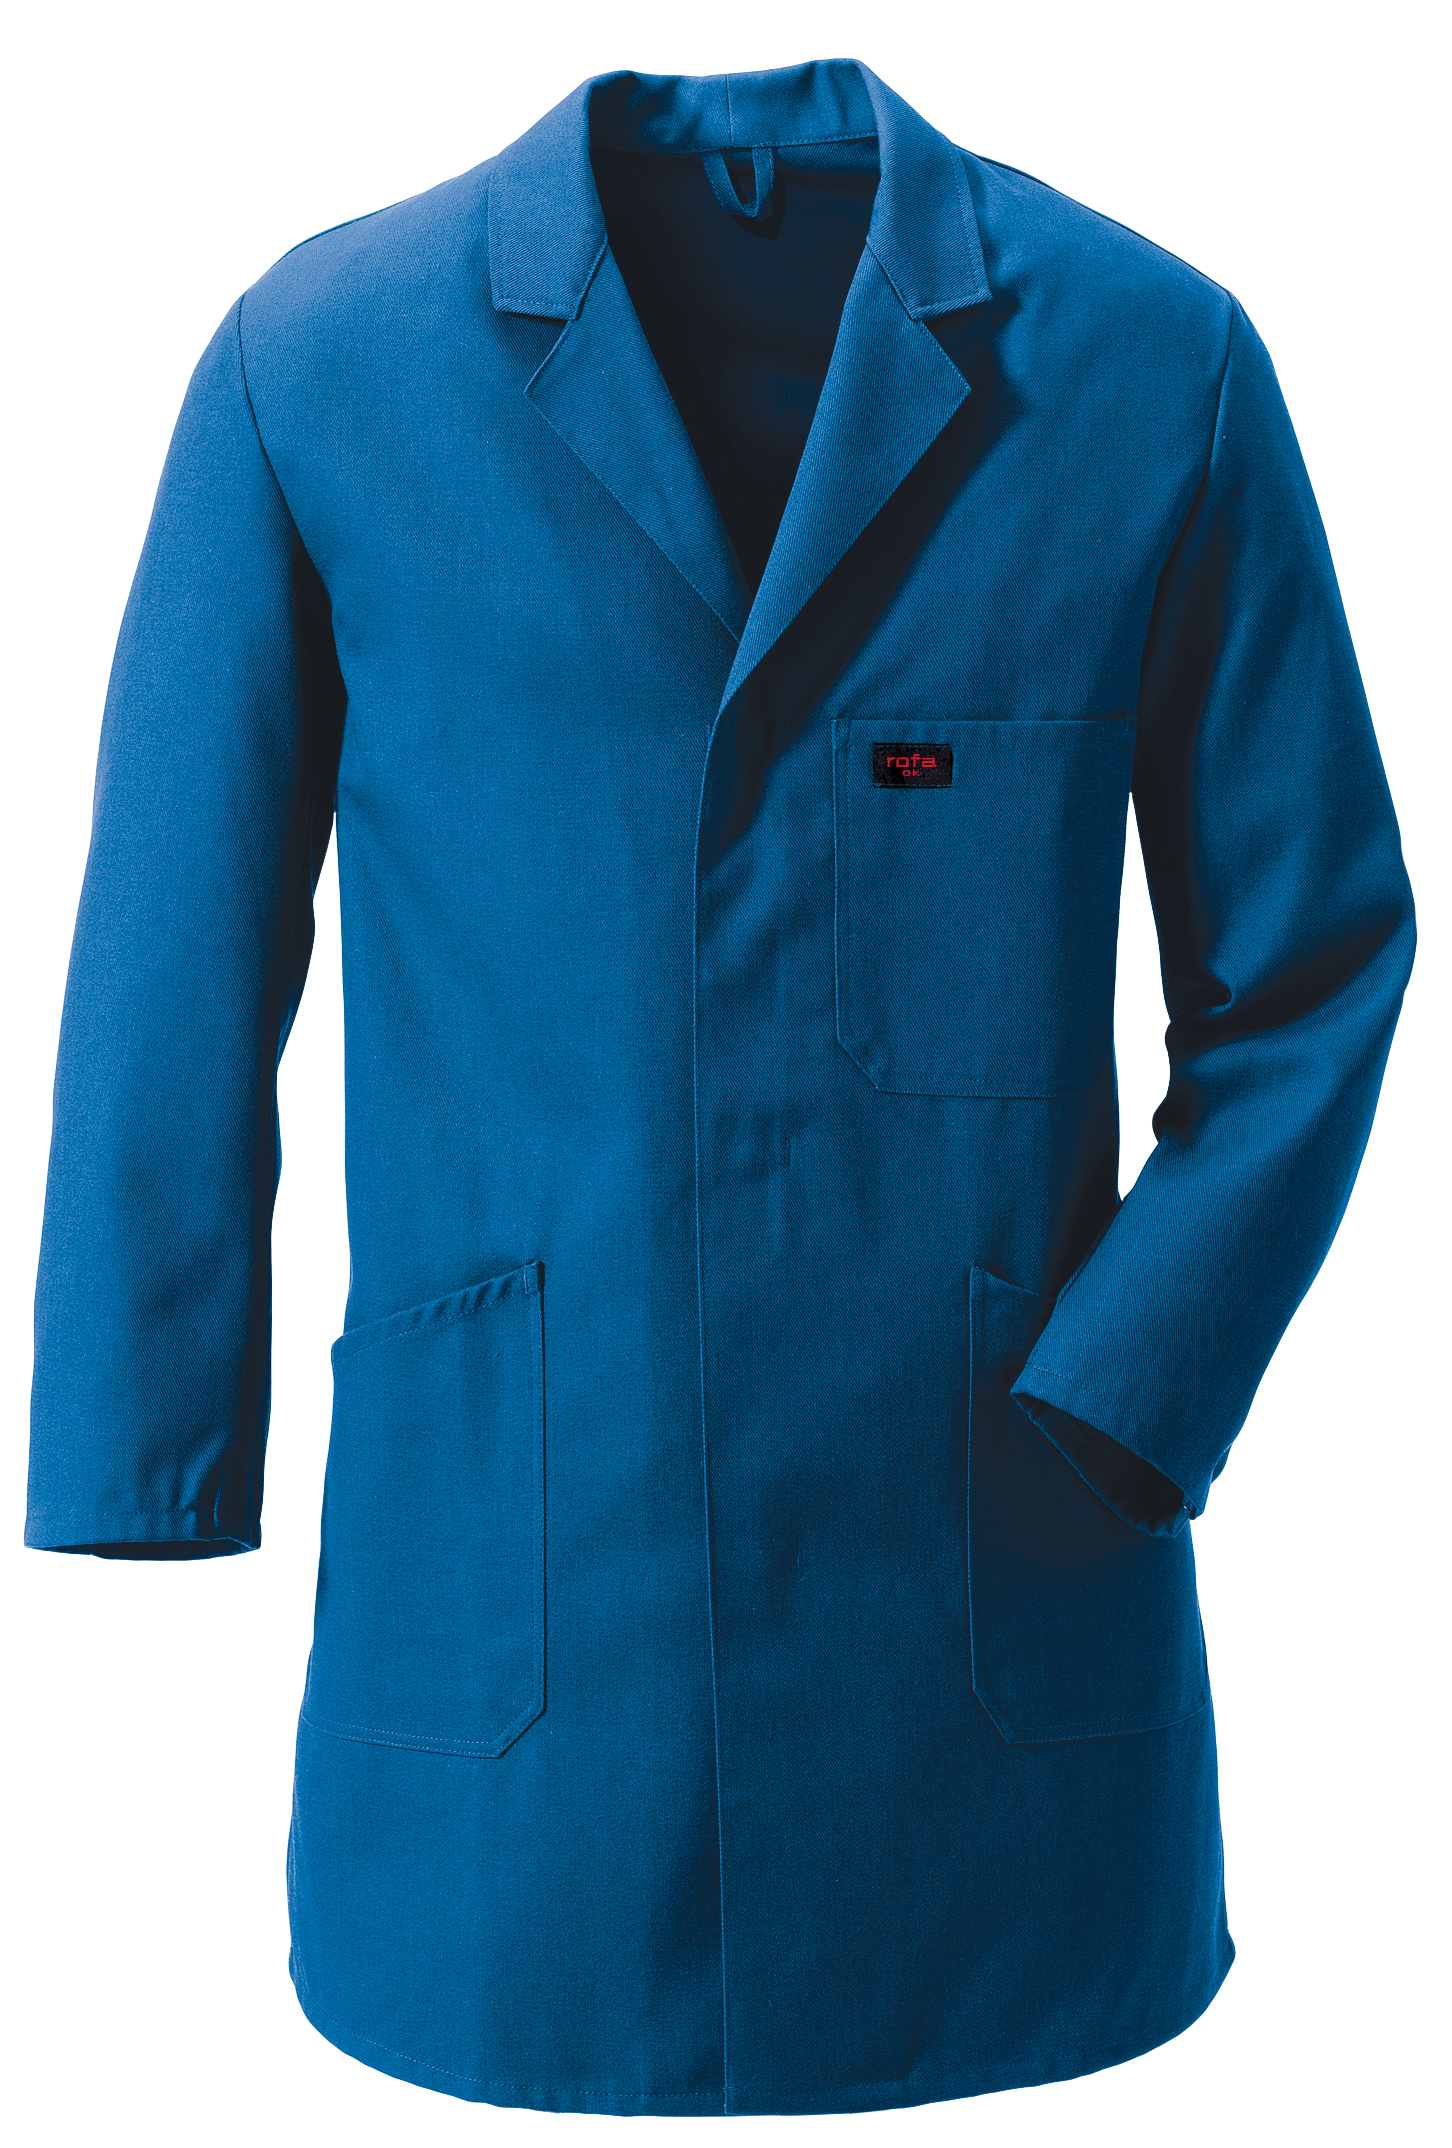 ROFA Berufsmantel Berufskittel Arbeitskittel Arbeitsmantel Schutzmantel Mantel Kittel Arbeitsmantel OK Standard kornblau ca 330 g